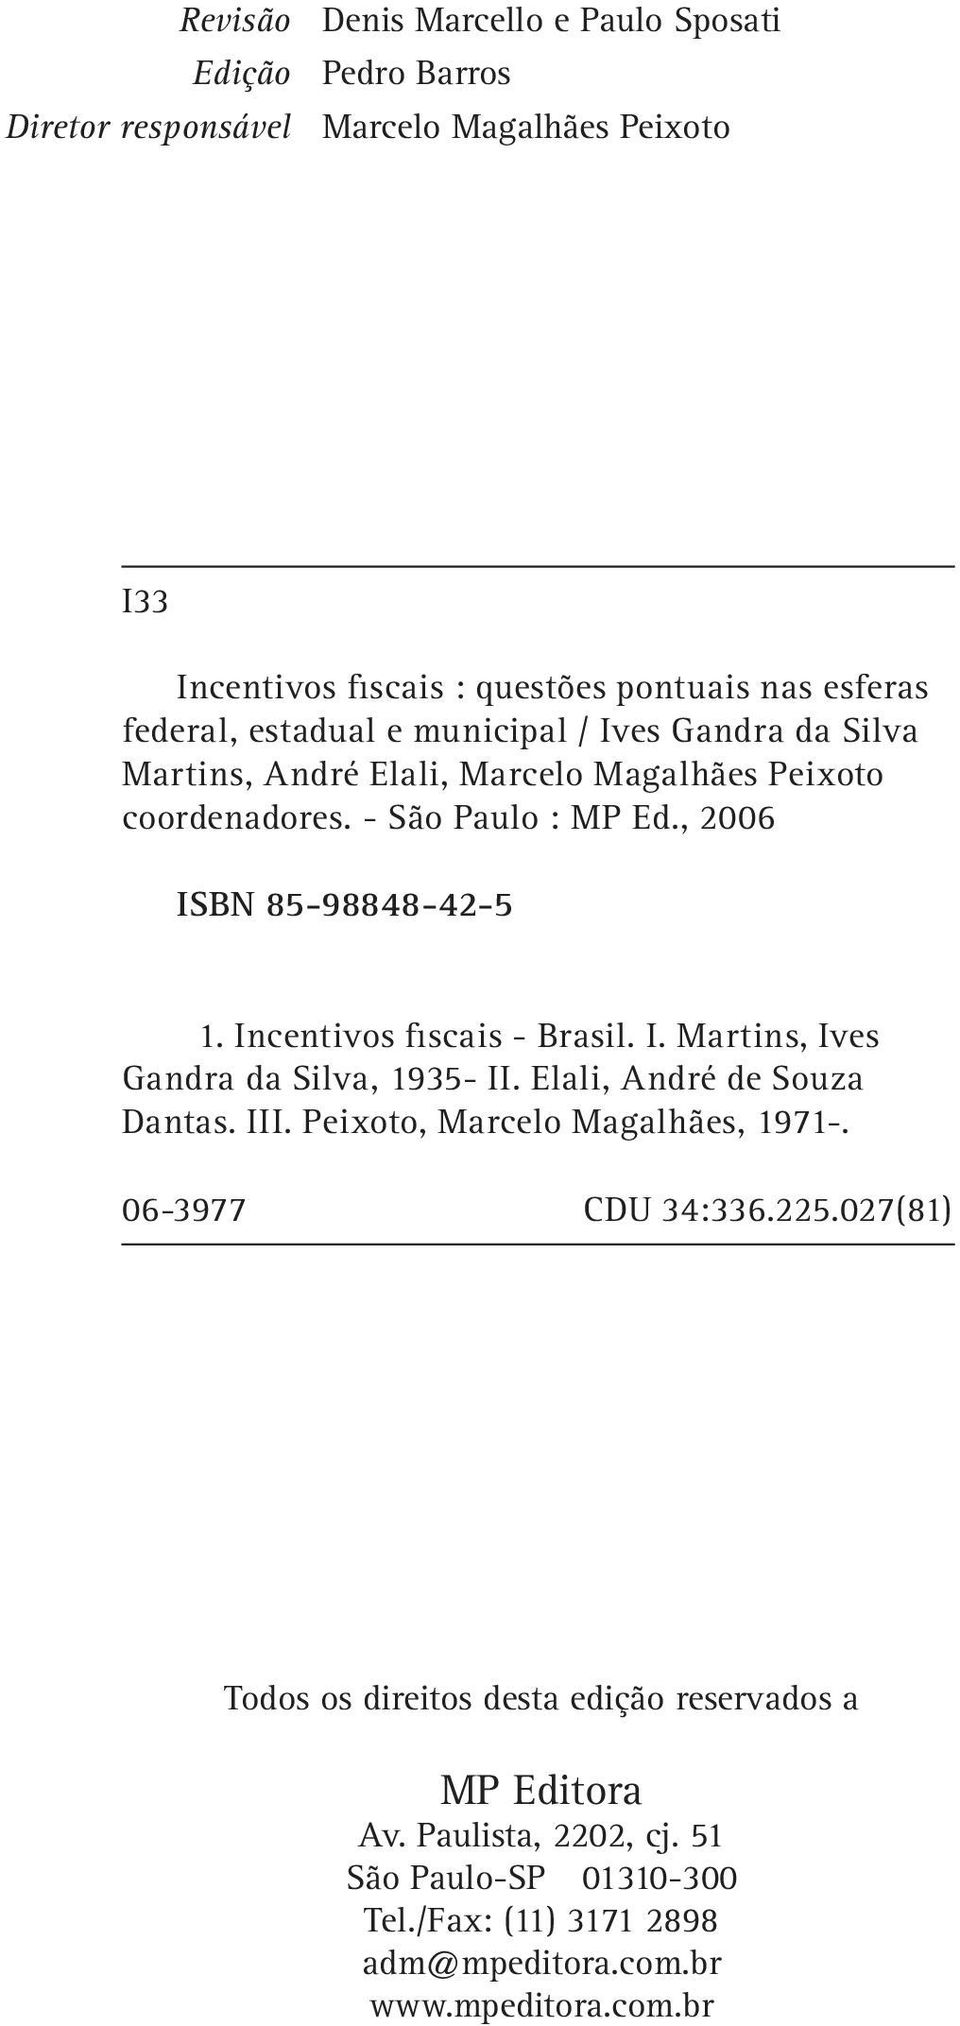 Incentivos fiscais - Brasil. I. Martins, Ives Gandra da Silva, 1935- II. Elali, André de Souza Dantas. III. Peixoto, Marcelo Magalhães, 1971-. 06-3977 CDU 34:336.225.